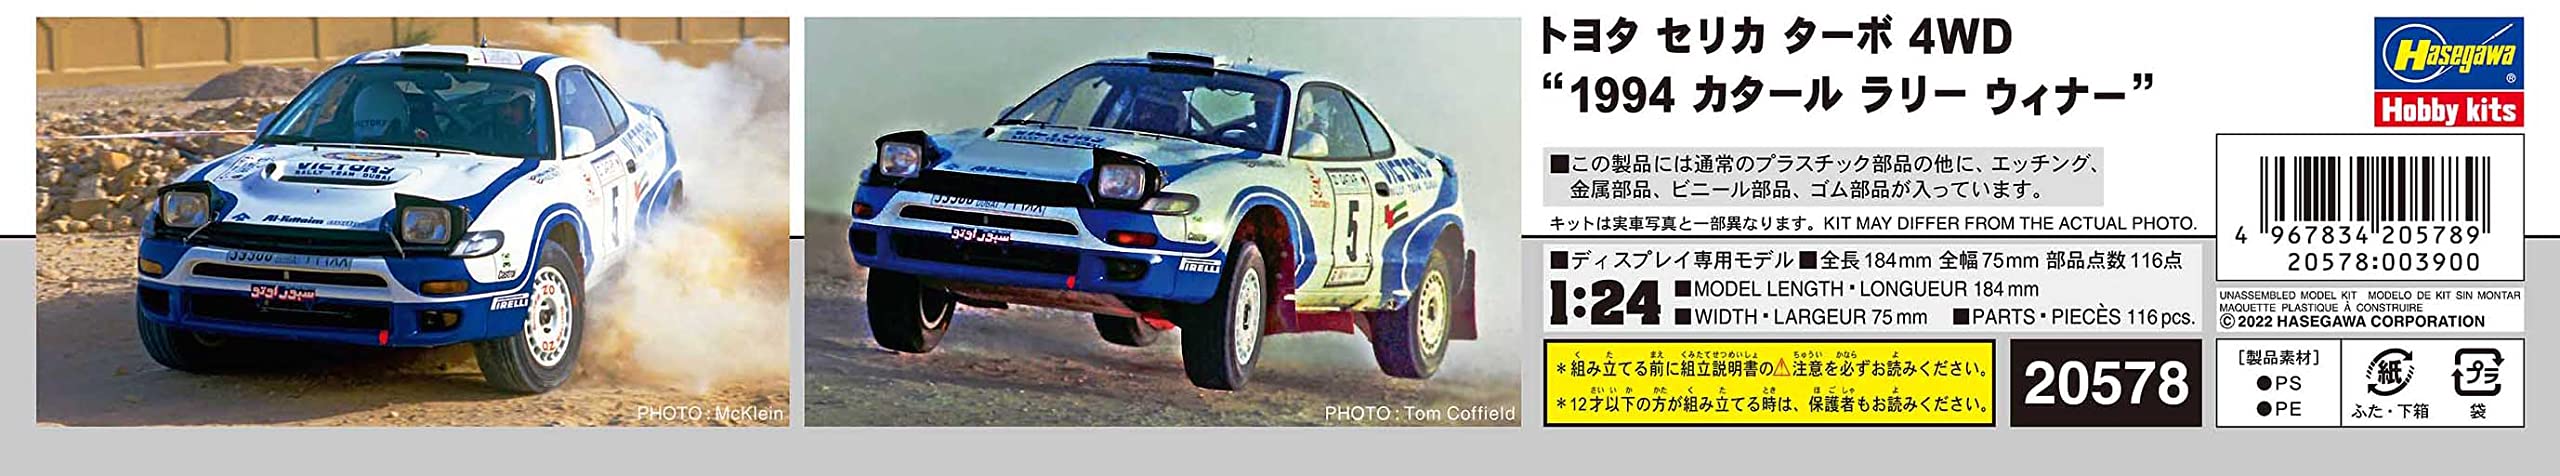 HASEGAWA 1/24 Toyota Celica Turbo 4Wd '1994 Qatar Rally Winner' Plastic Model